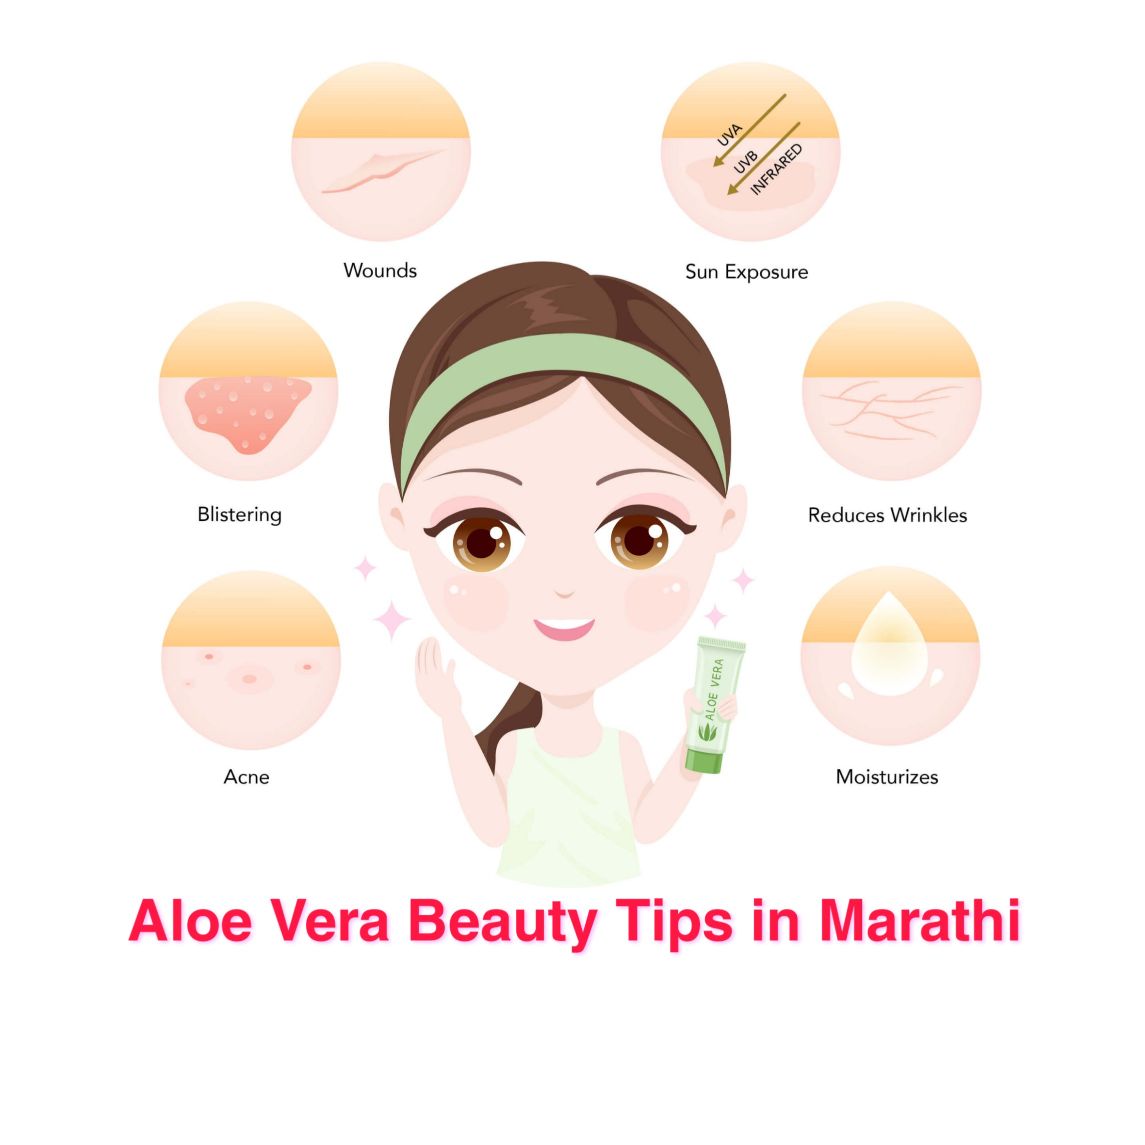 Aloe Vera Beauty Tips in Marathi